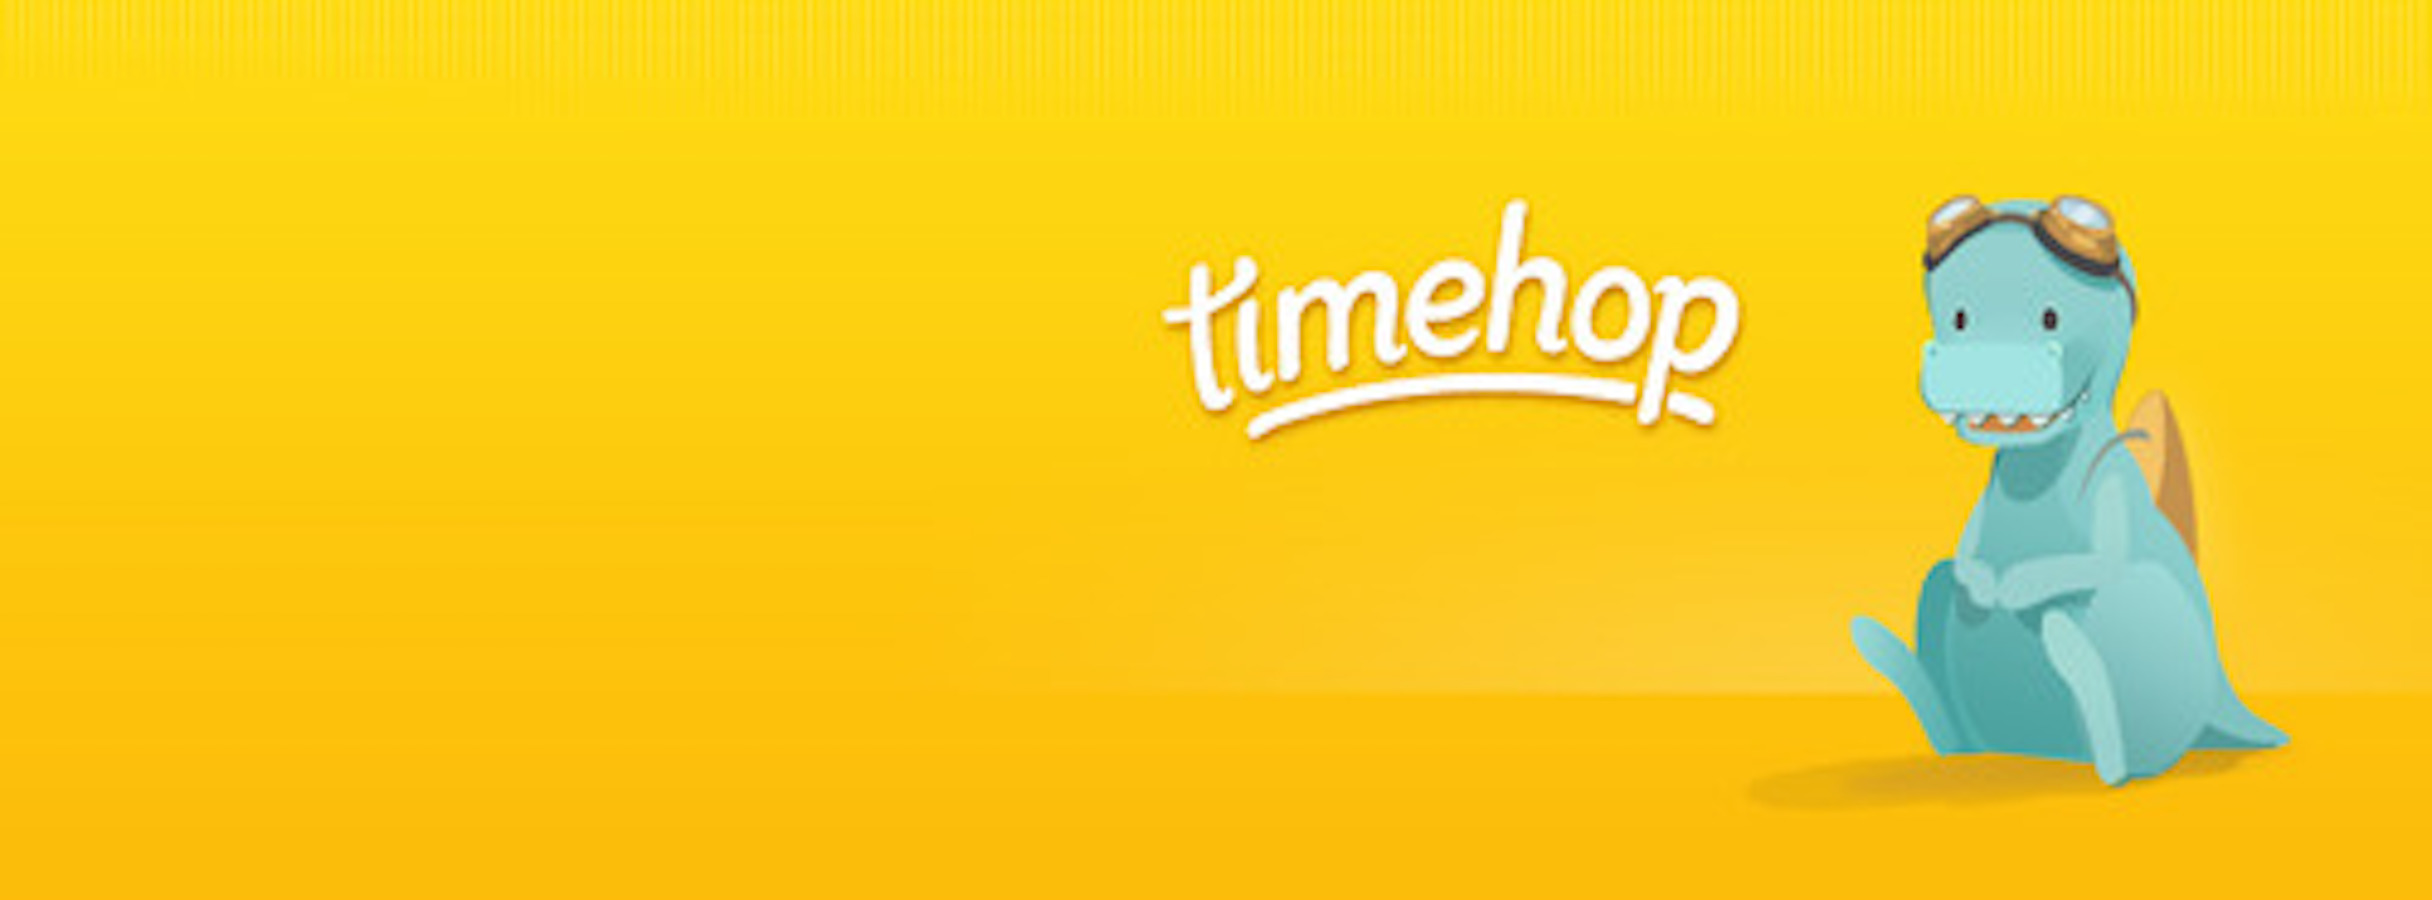 how does timehop make money timehop dinosaur banner 